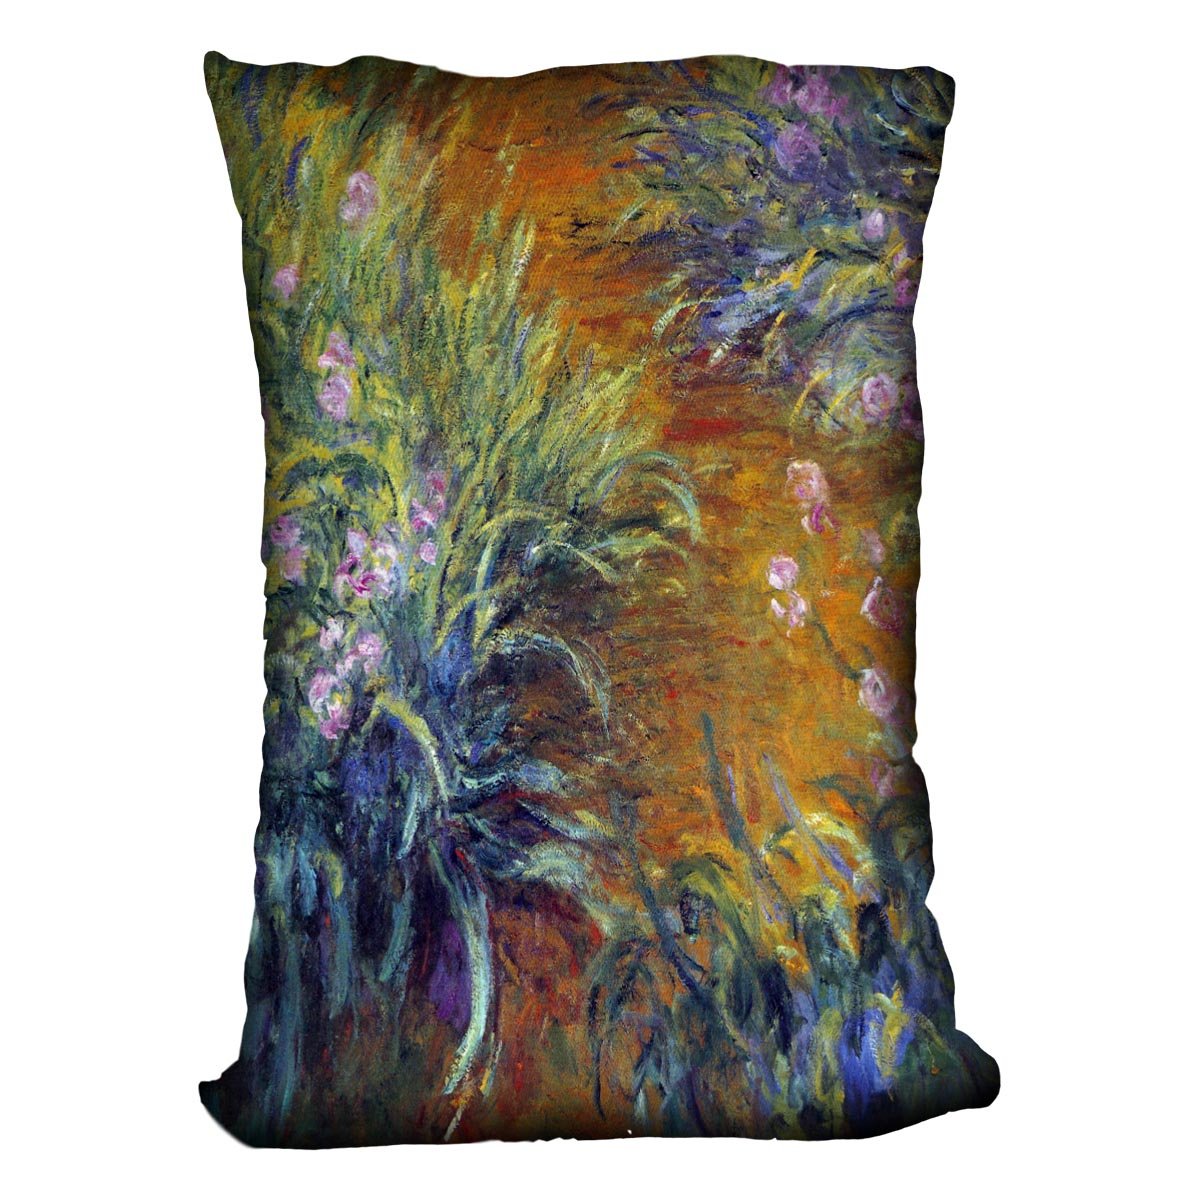 Irises by Monet Throw Pillow